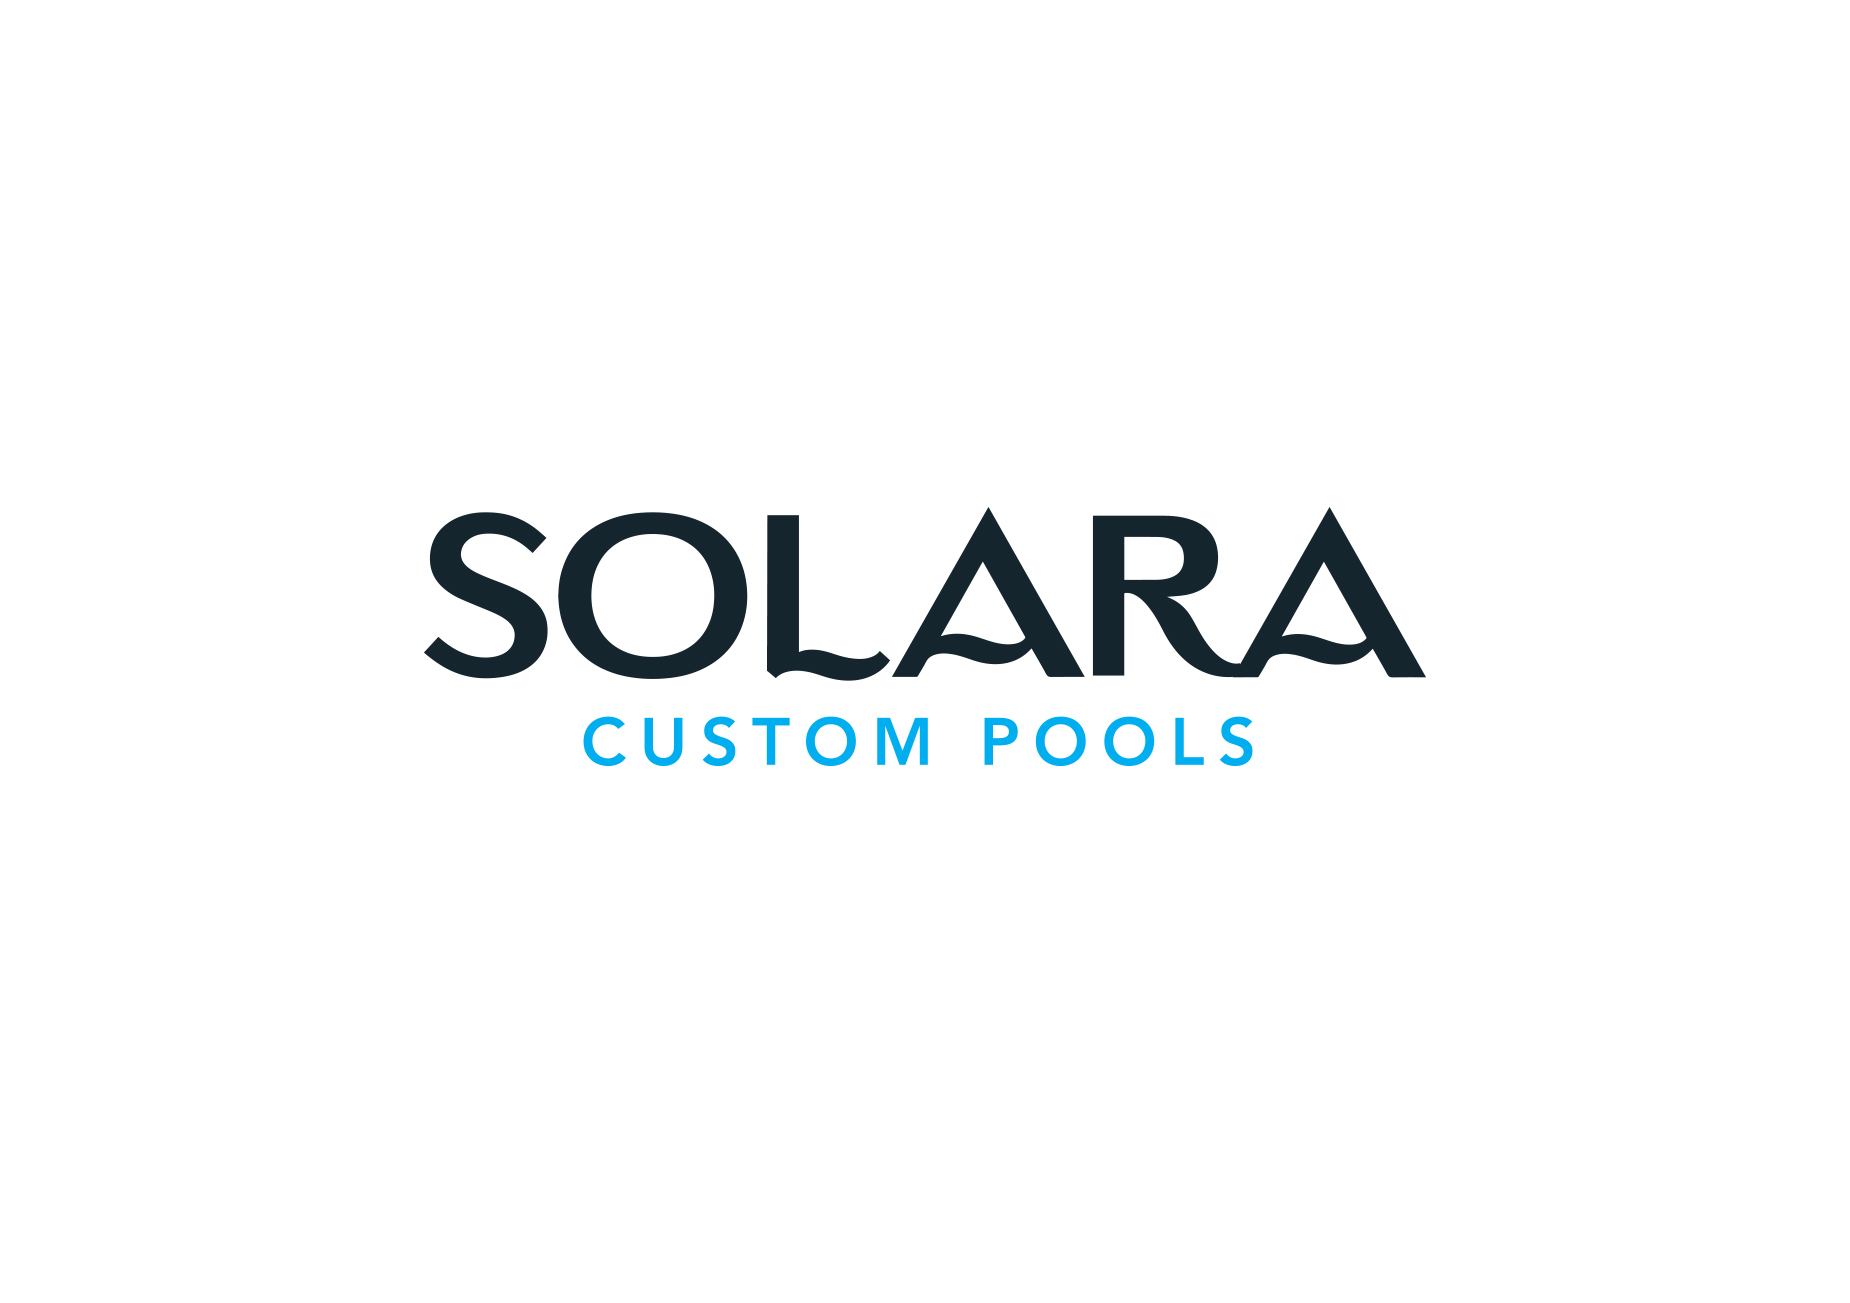 Solara Custom Pools Identity